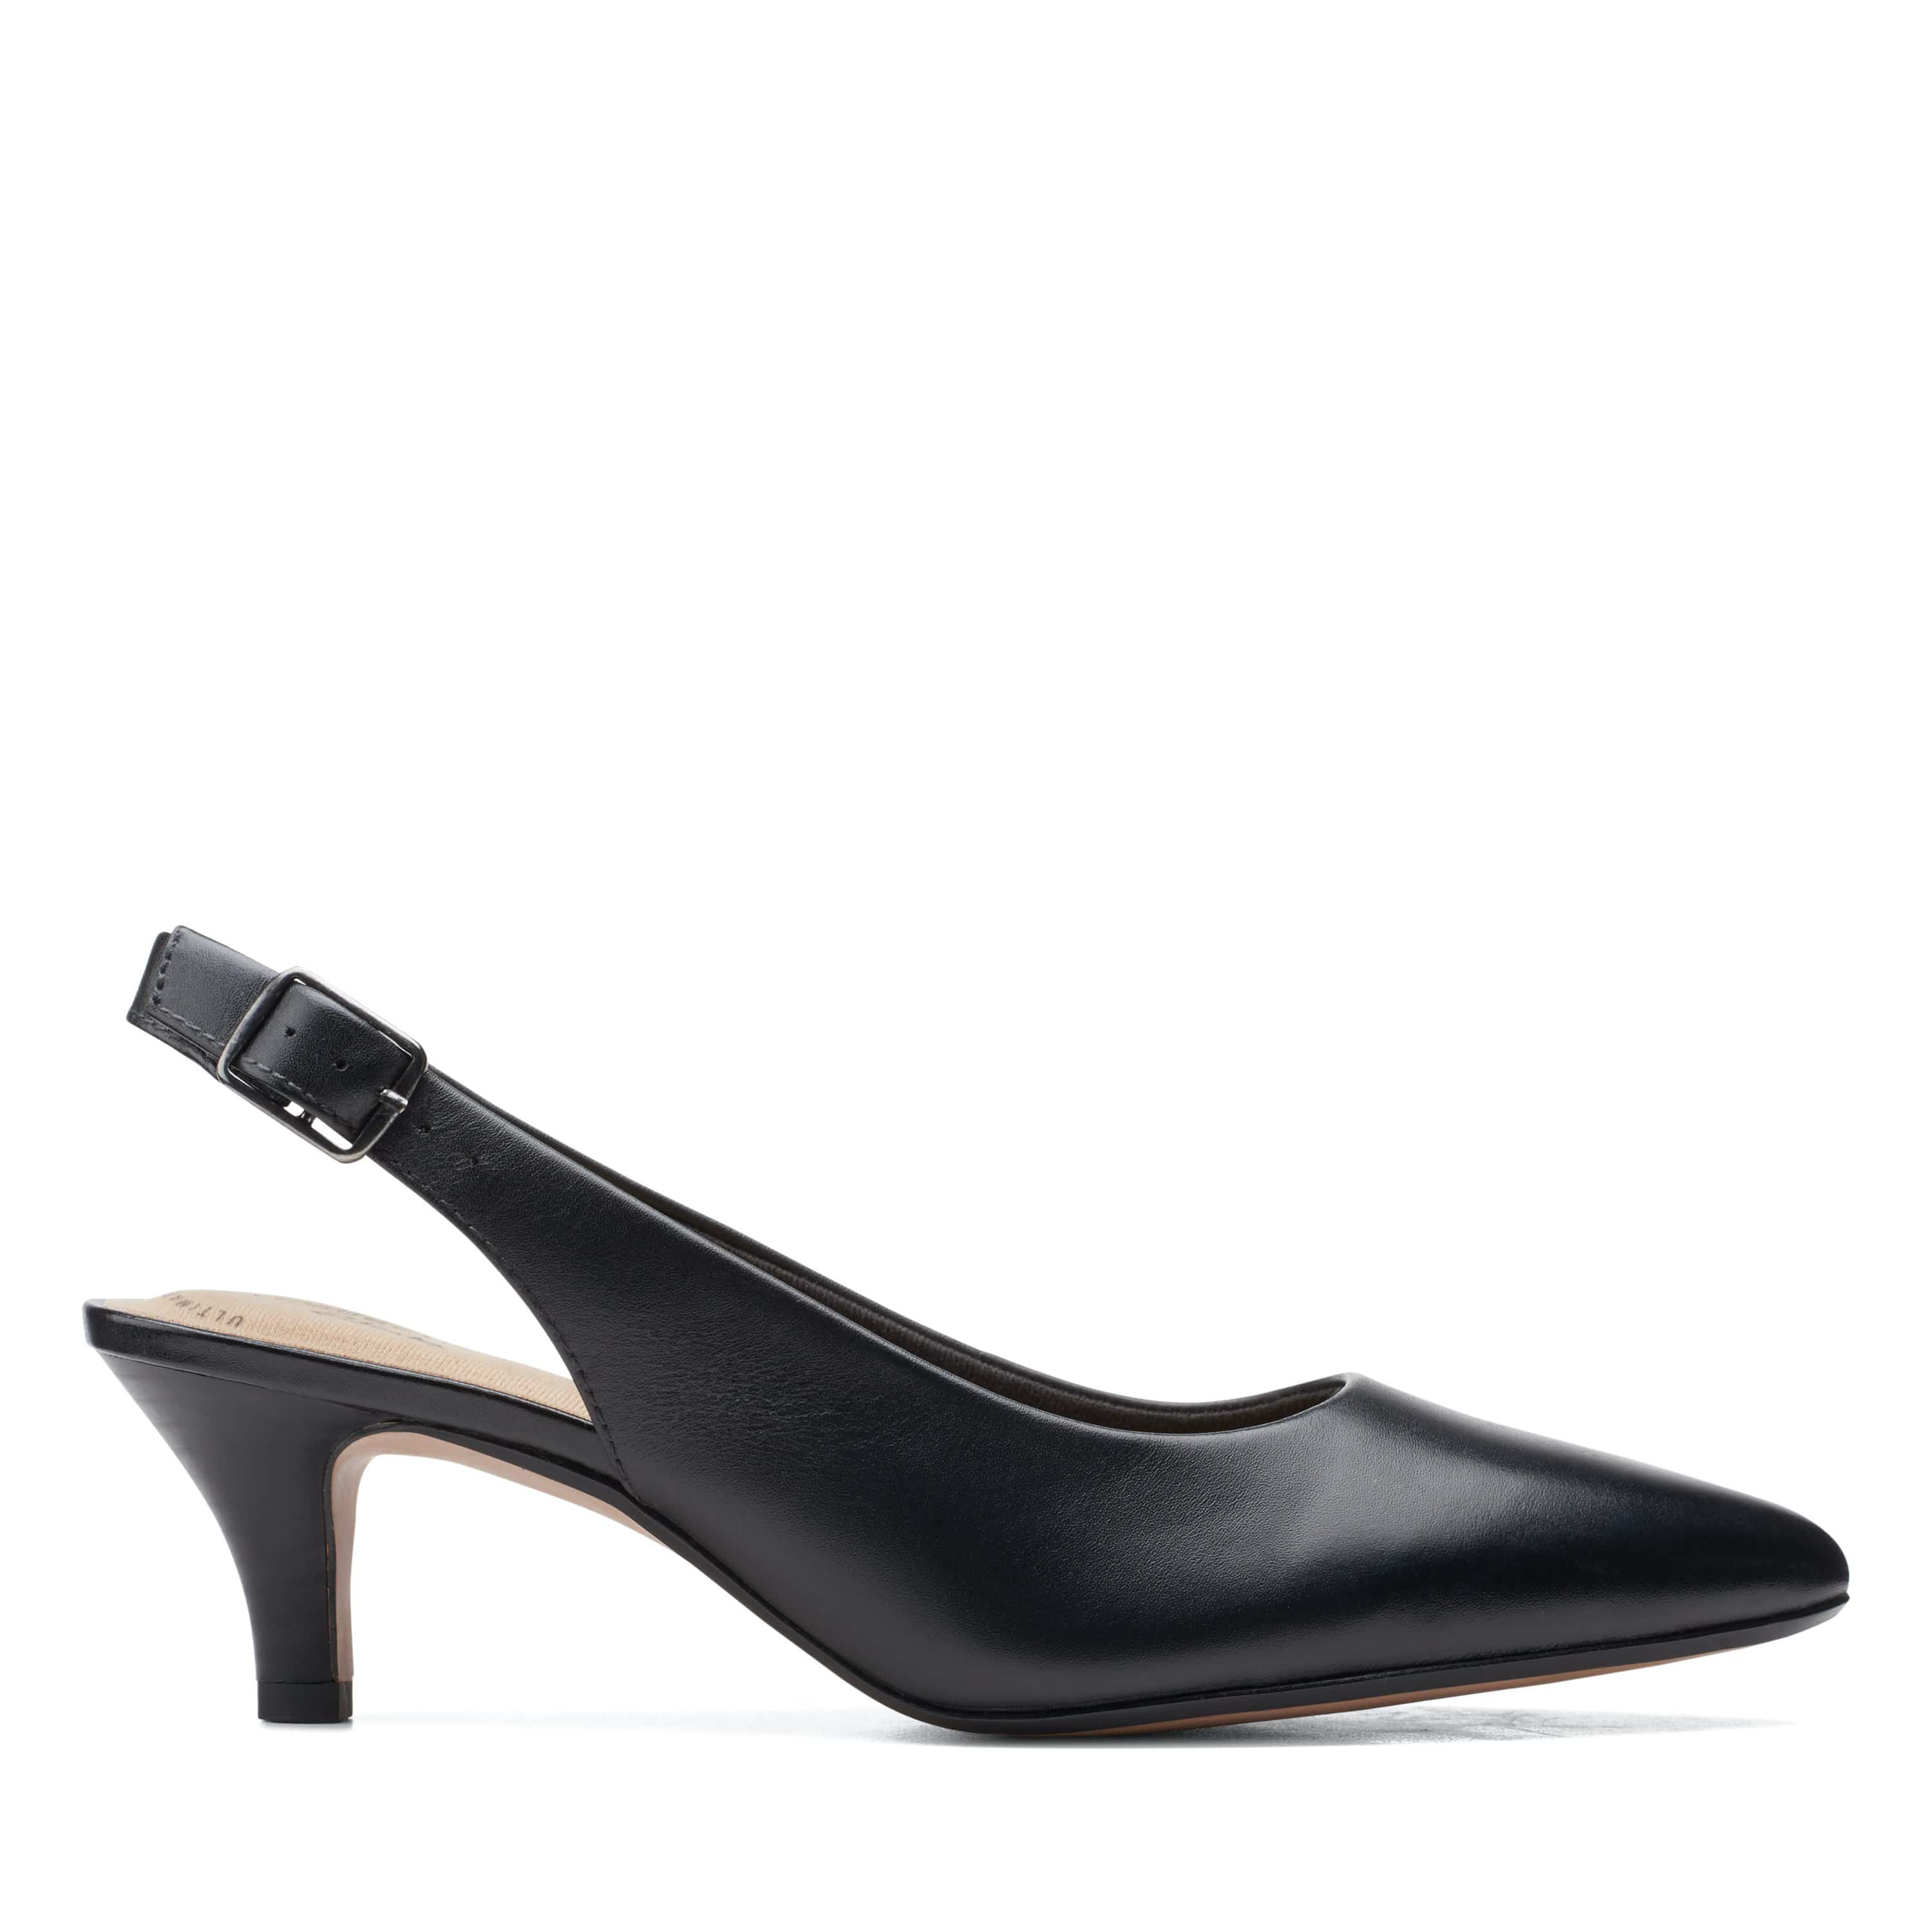 Clarks Linvale سوندرا أحذية جلدية سوداء - 26153230 - D العرض (تناسب قياسي)